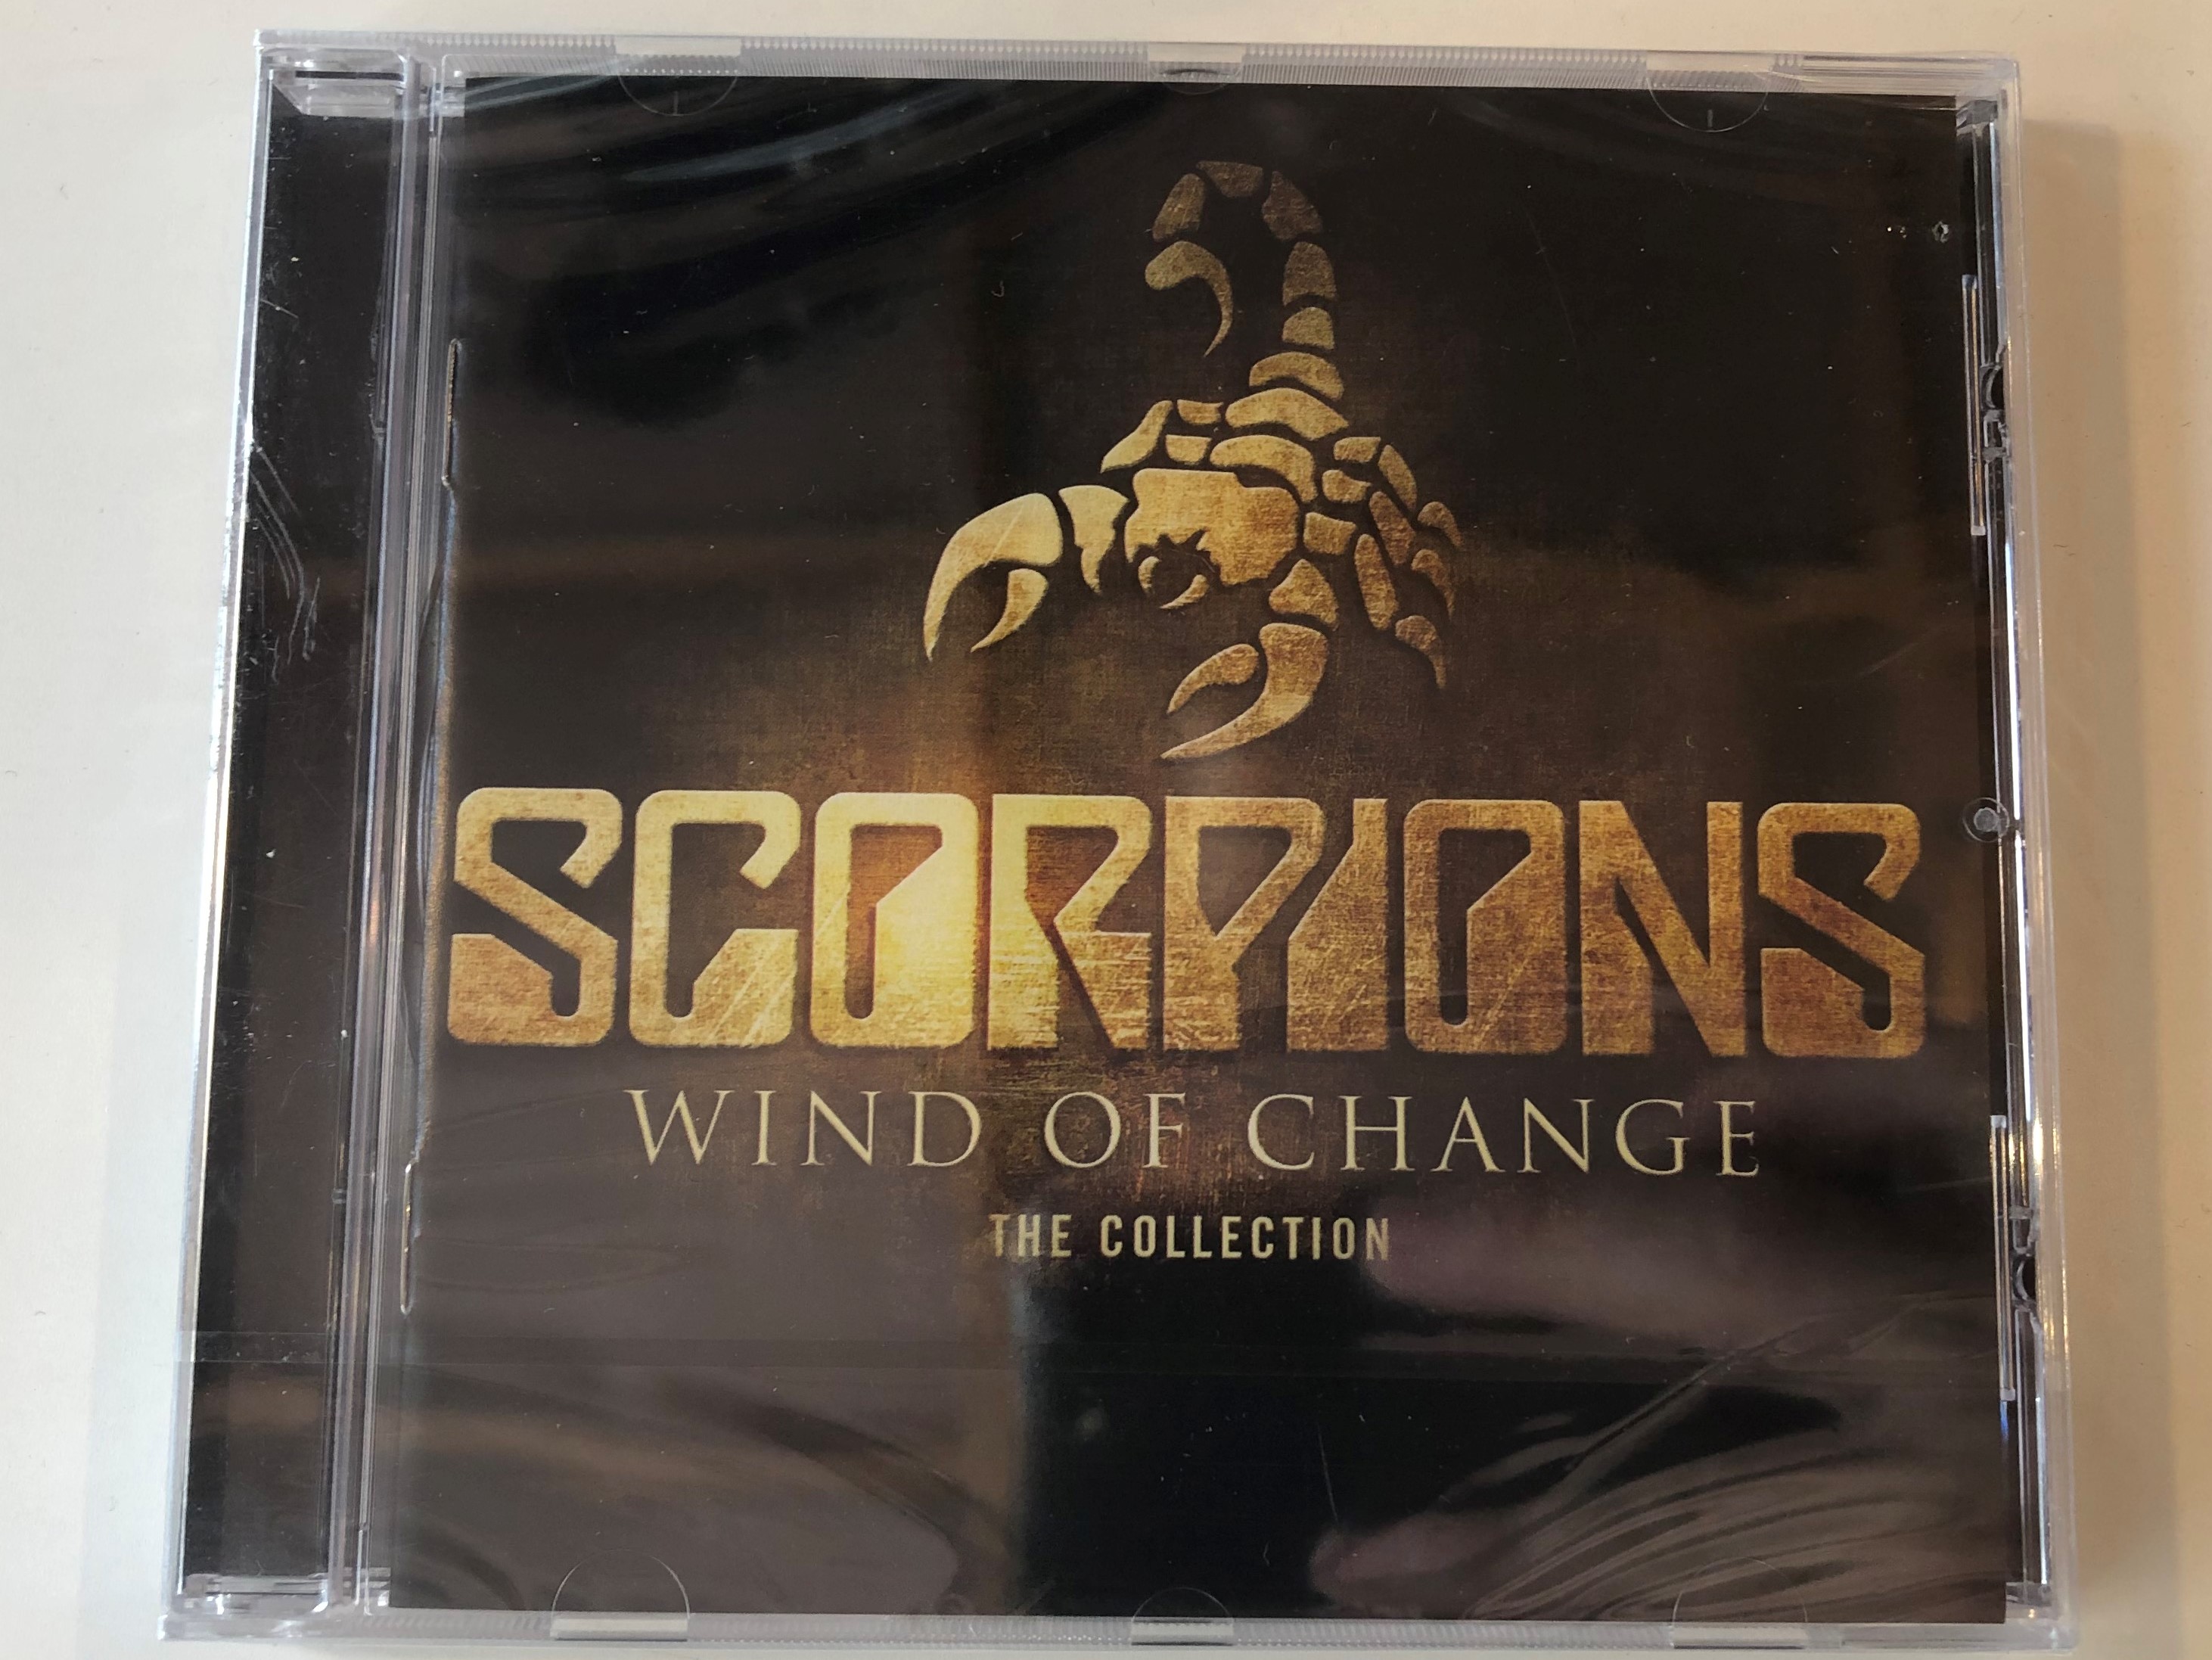 scorpions-wind-of-change-the-collection-universal-umc-audio-cd-2013-00600753432839-1-.jpg